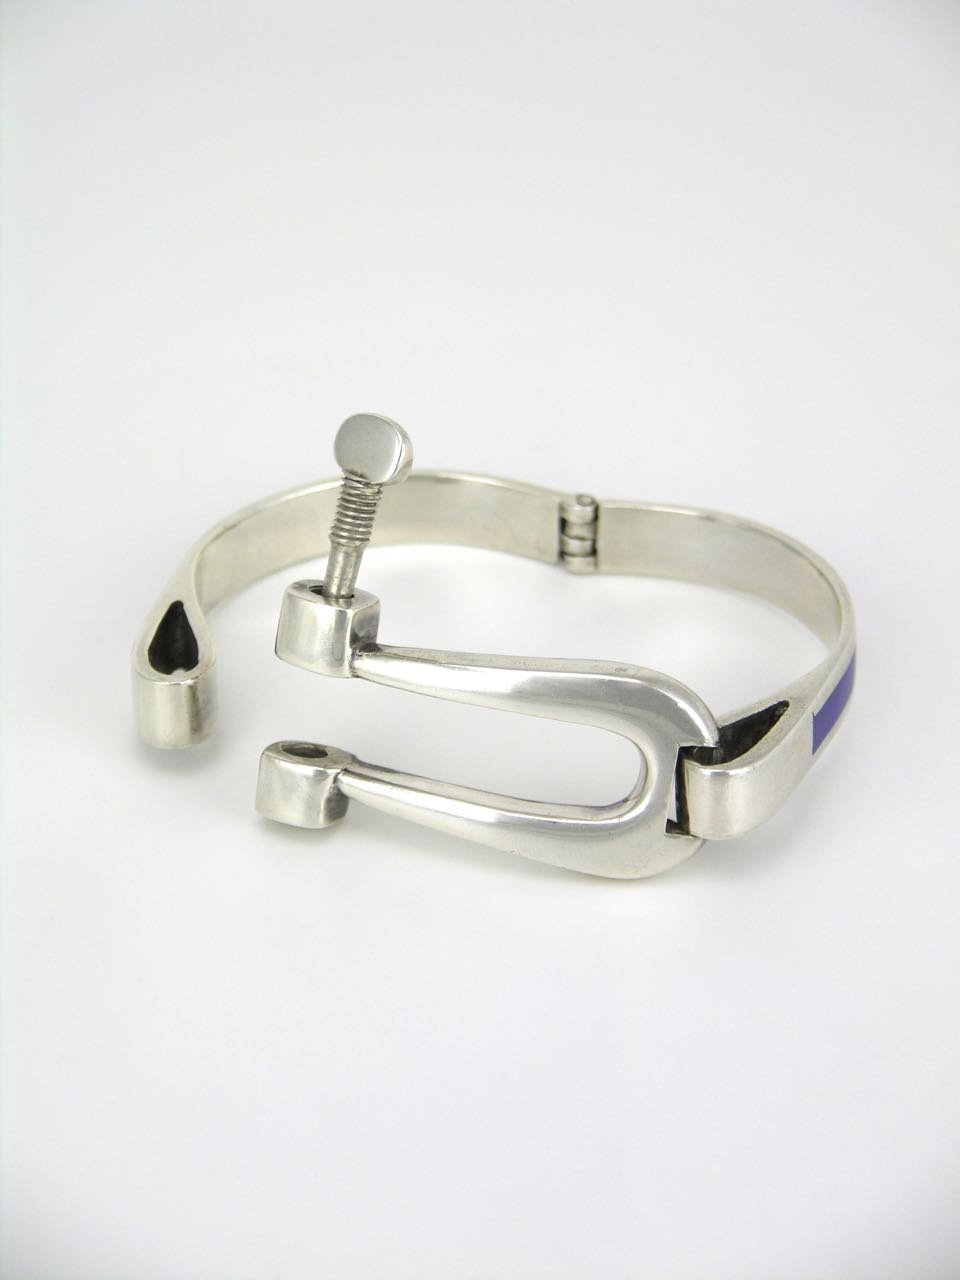 Gucci silver blue enamel equestrian bracelet